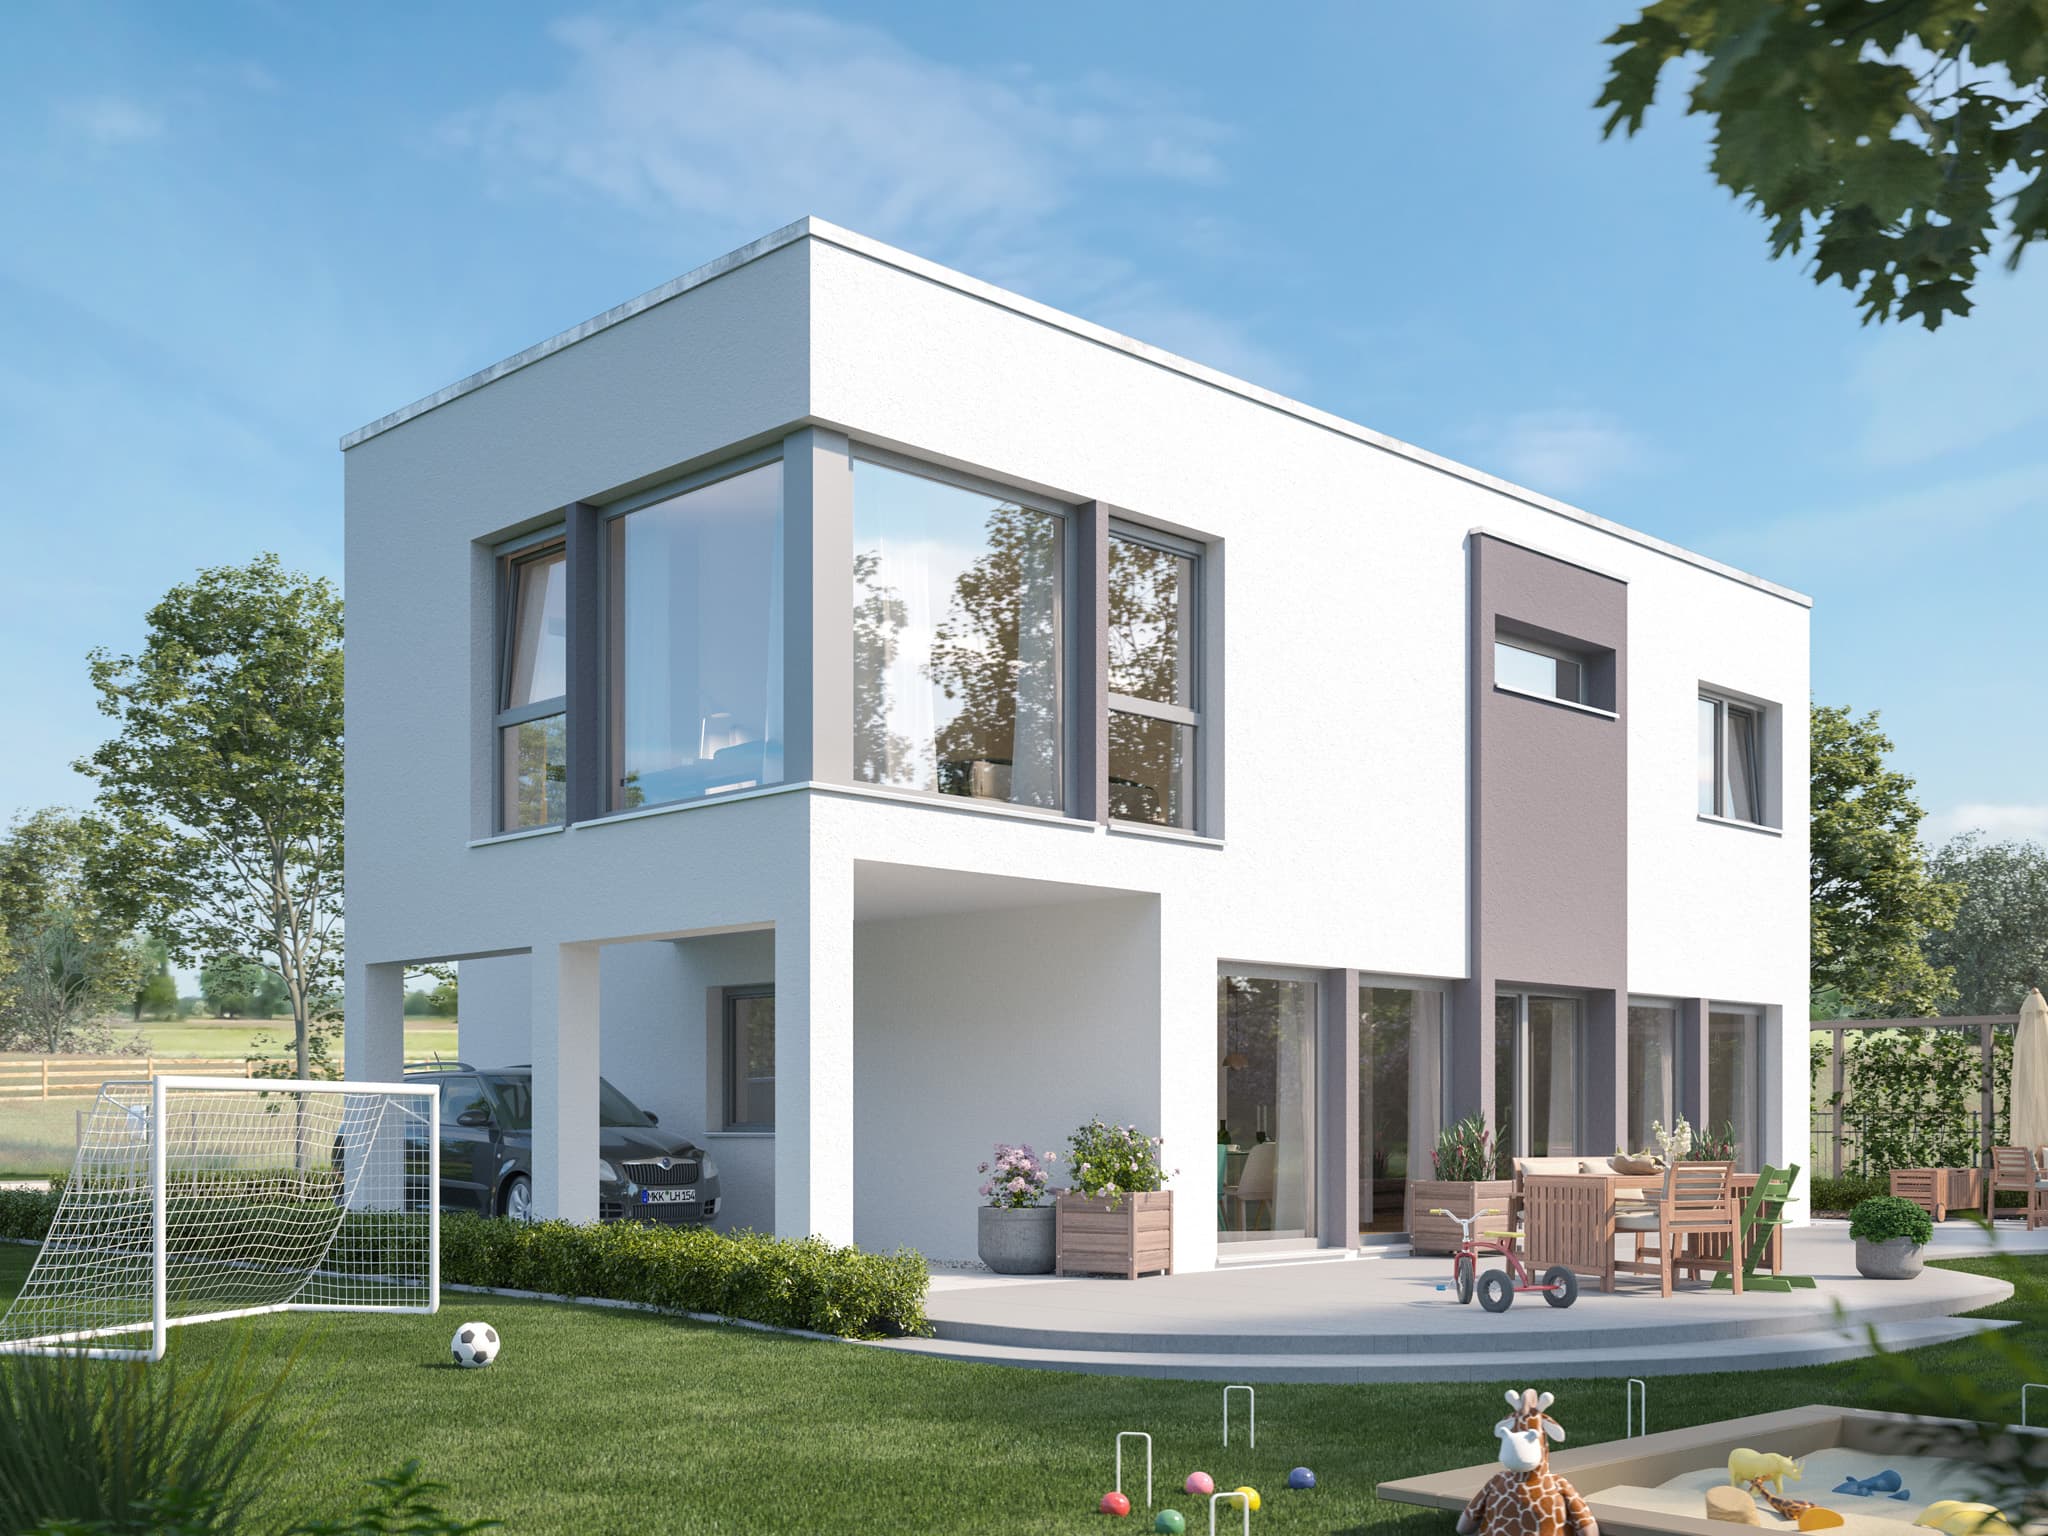 Einfamilienhaus modern mit Flachdach & Carport, 5 Zimmer, 154 qm - Living Haus Fertighaus SUNSHINE 154 V7 - HausbauDirekt.de